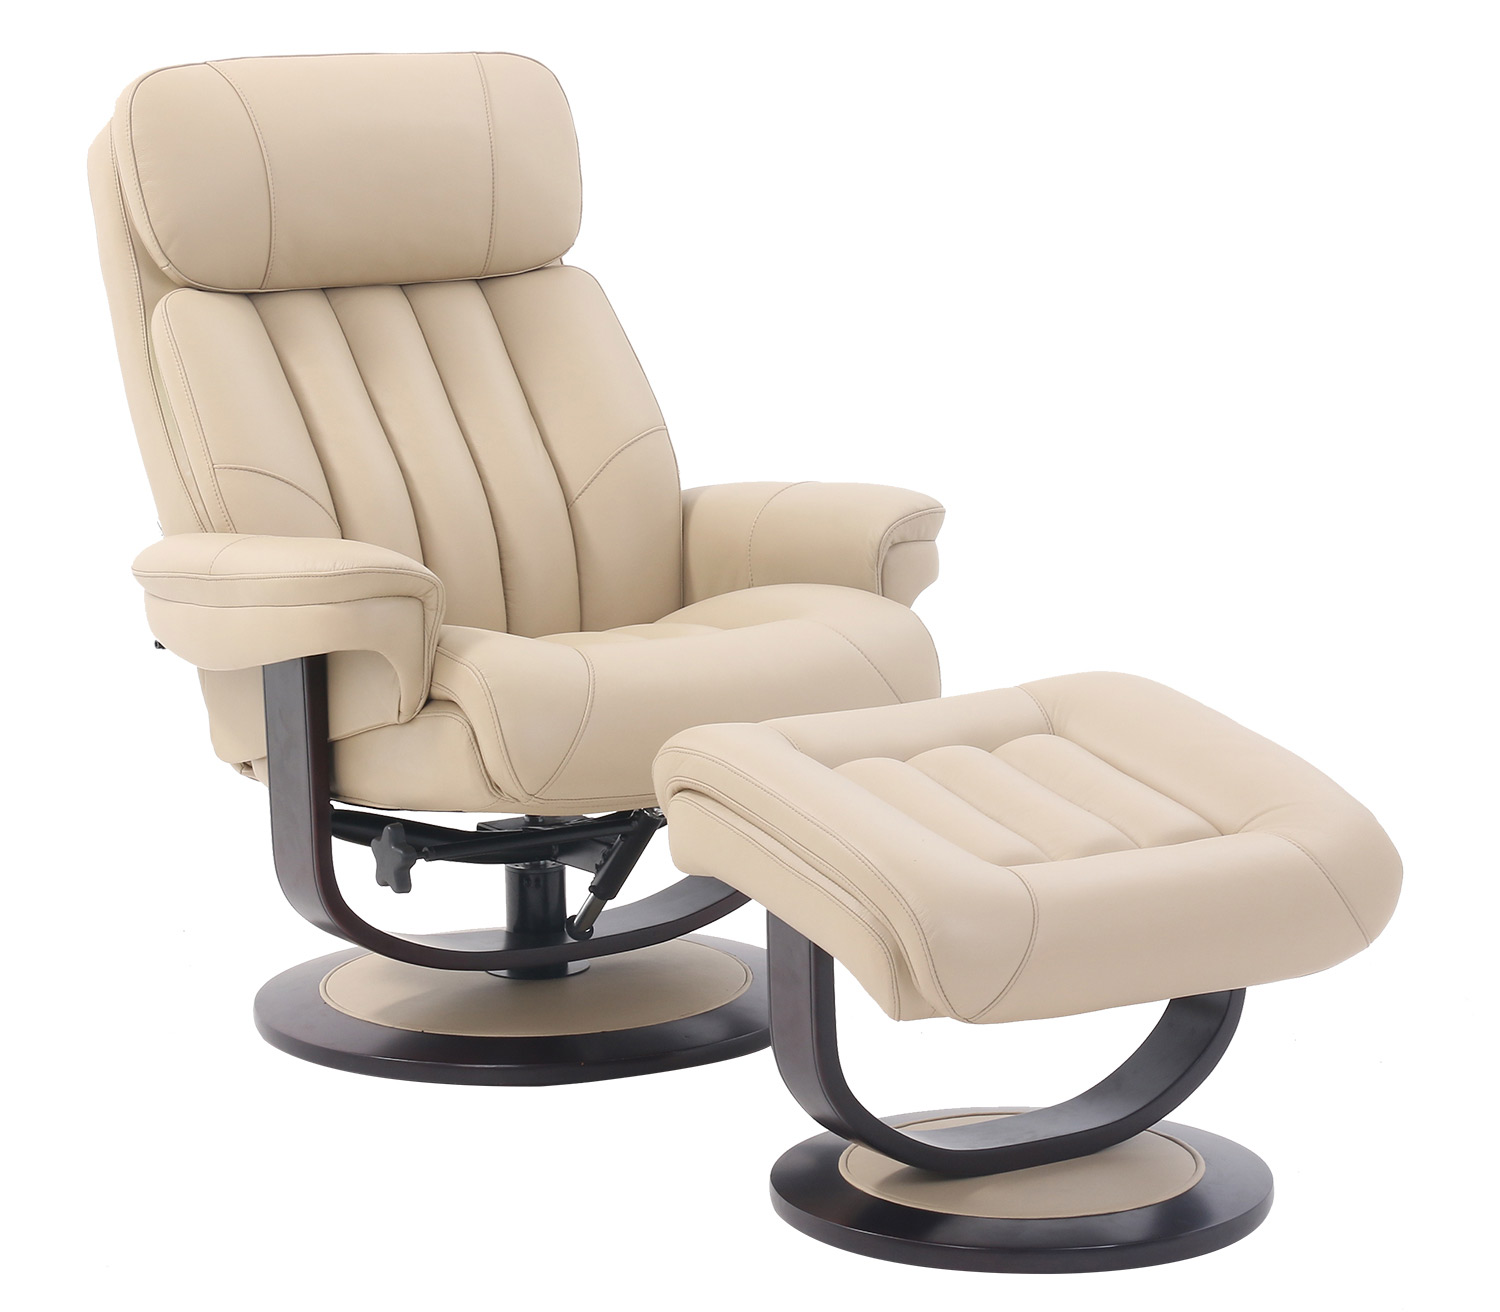 Barcalounger Oakleigh Pedestal Recliner Chair and Ottoman - Hilton Ivory/Leather match